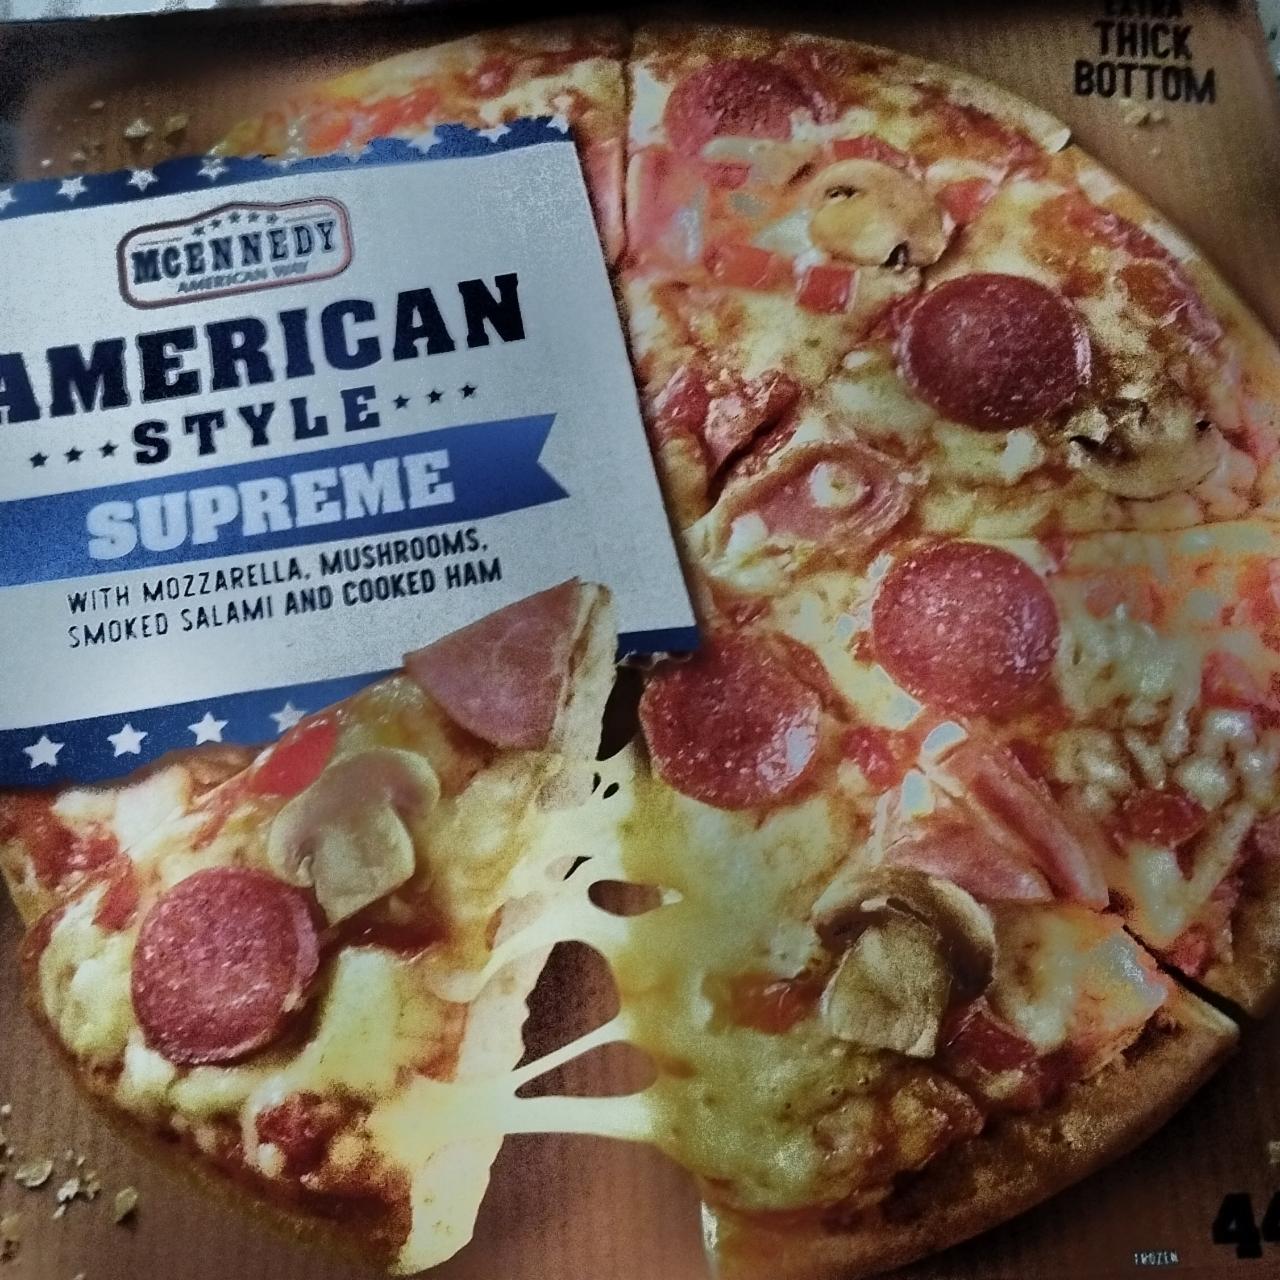 Képek - American style Supreme pizza Mcennedy American way